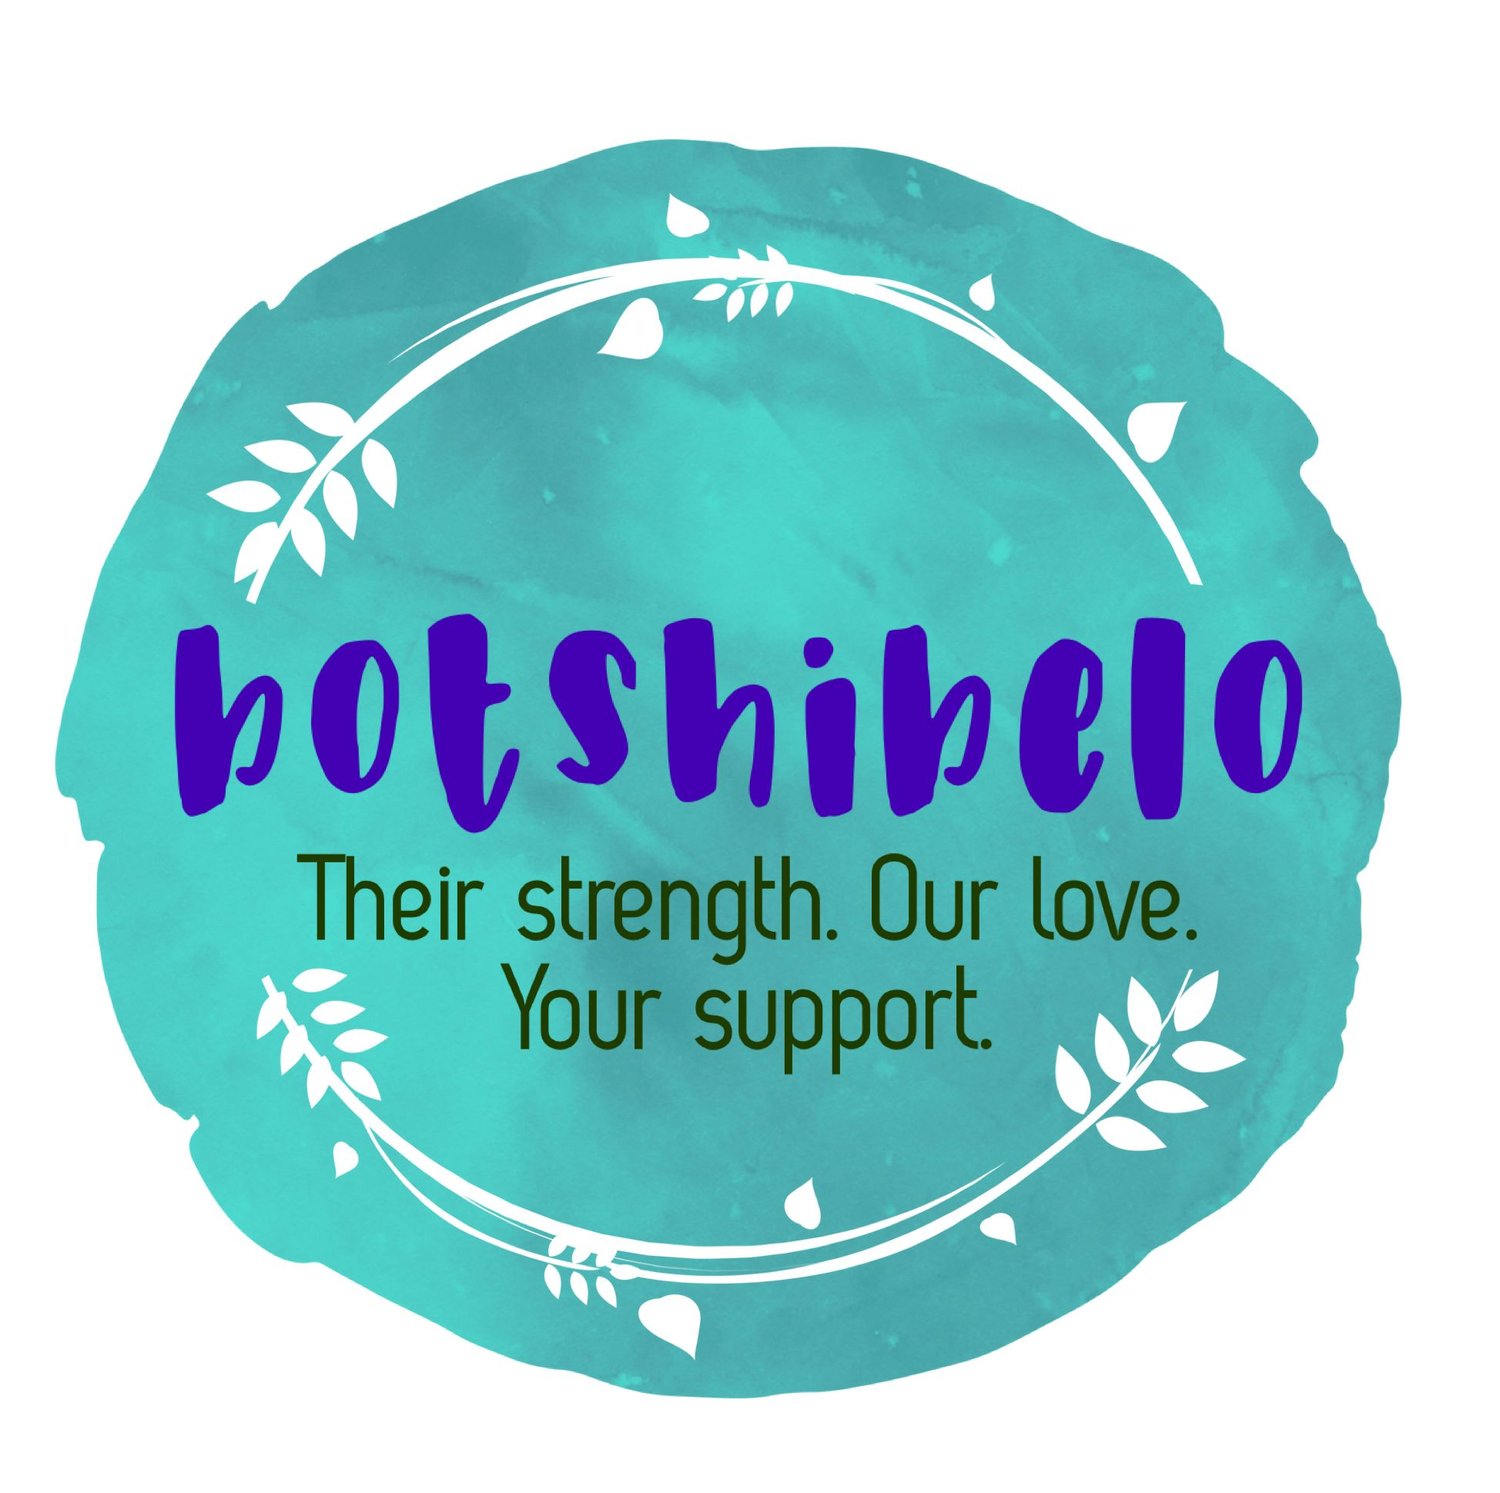 Botshibelo Community Development Trust